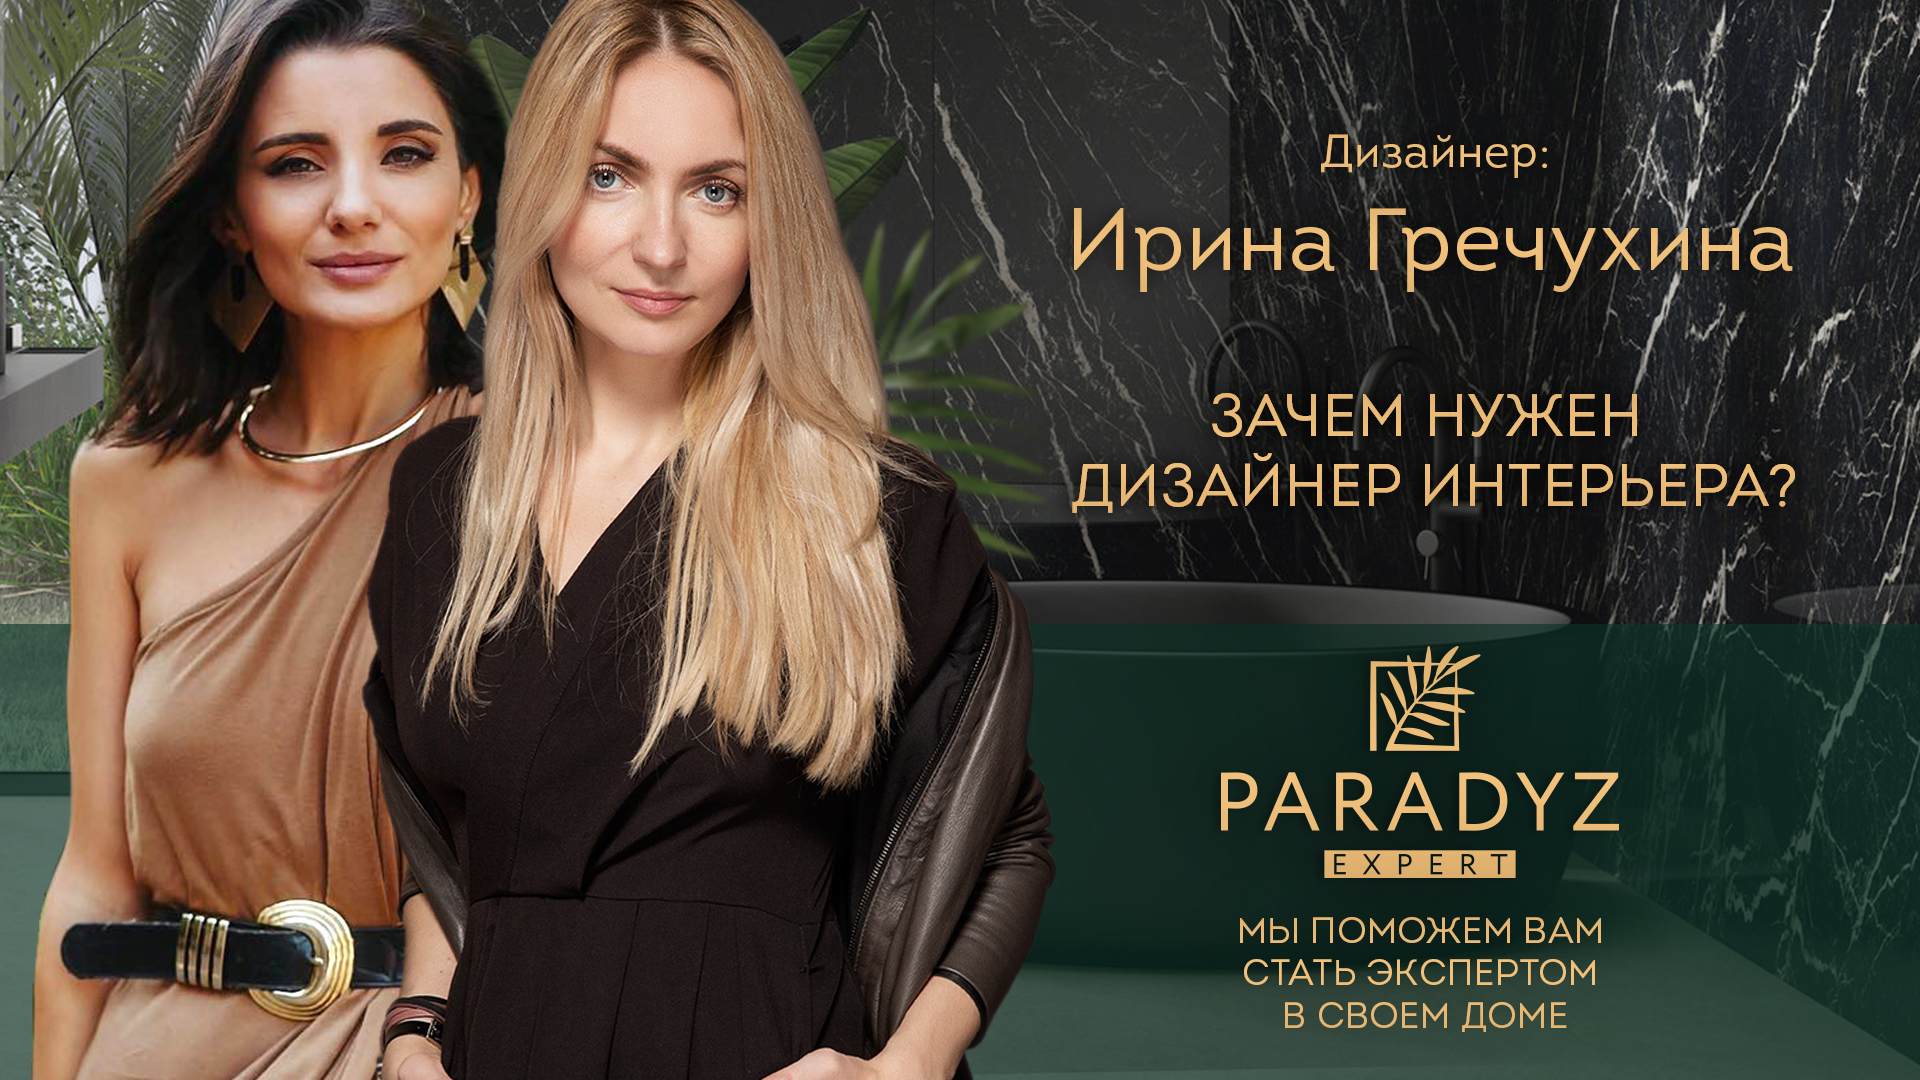 Paradyz Expert - новый видеопроект от Paradyz Showroom 